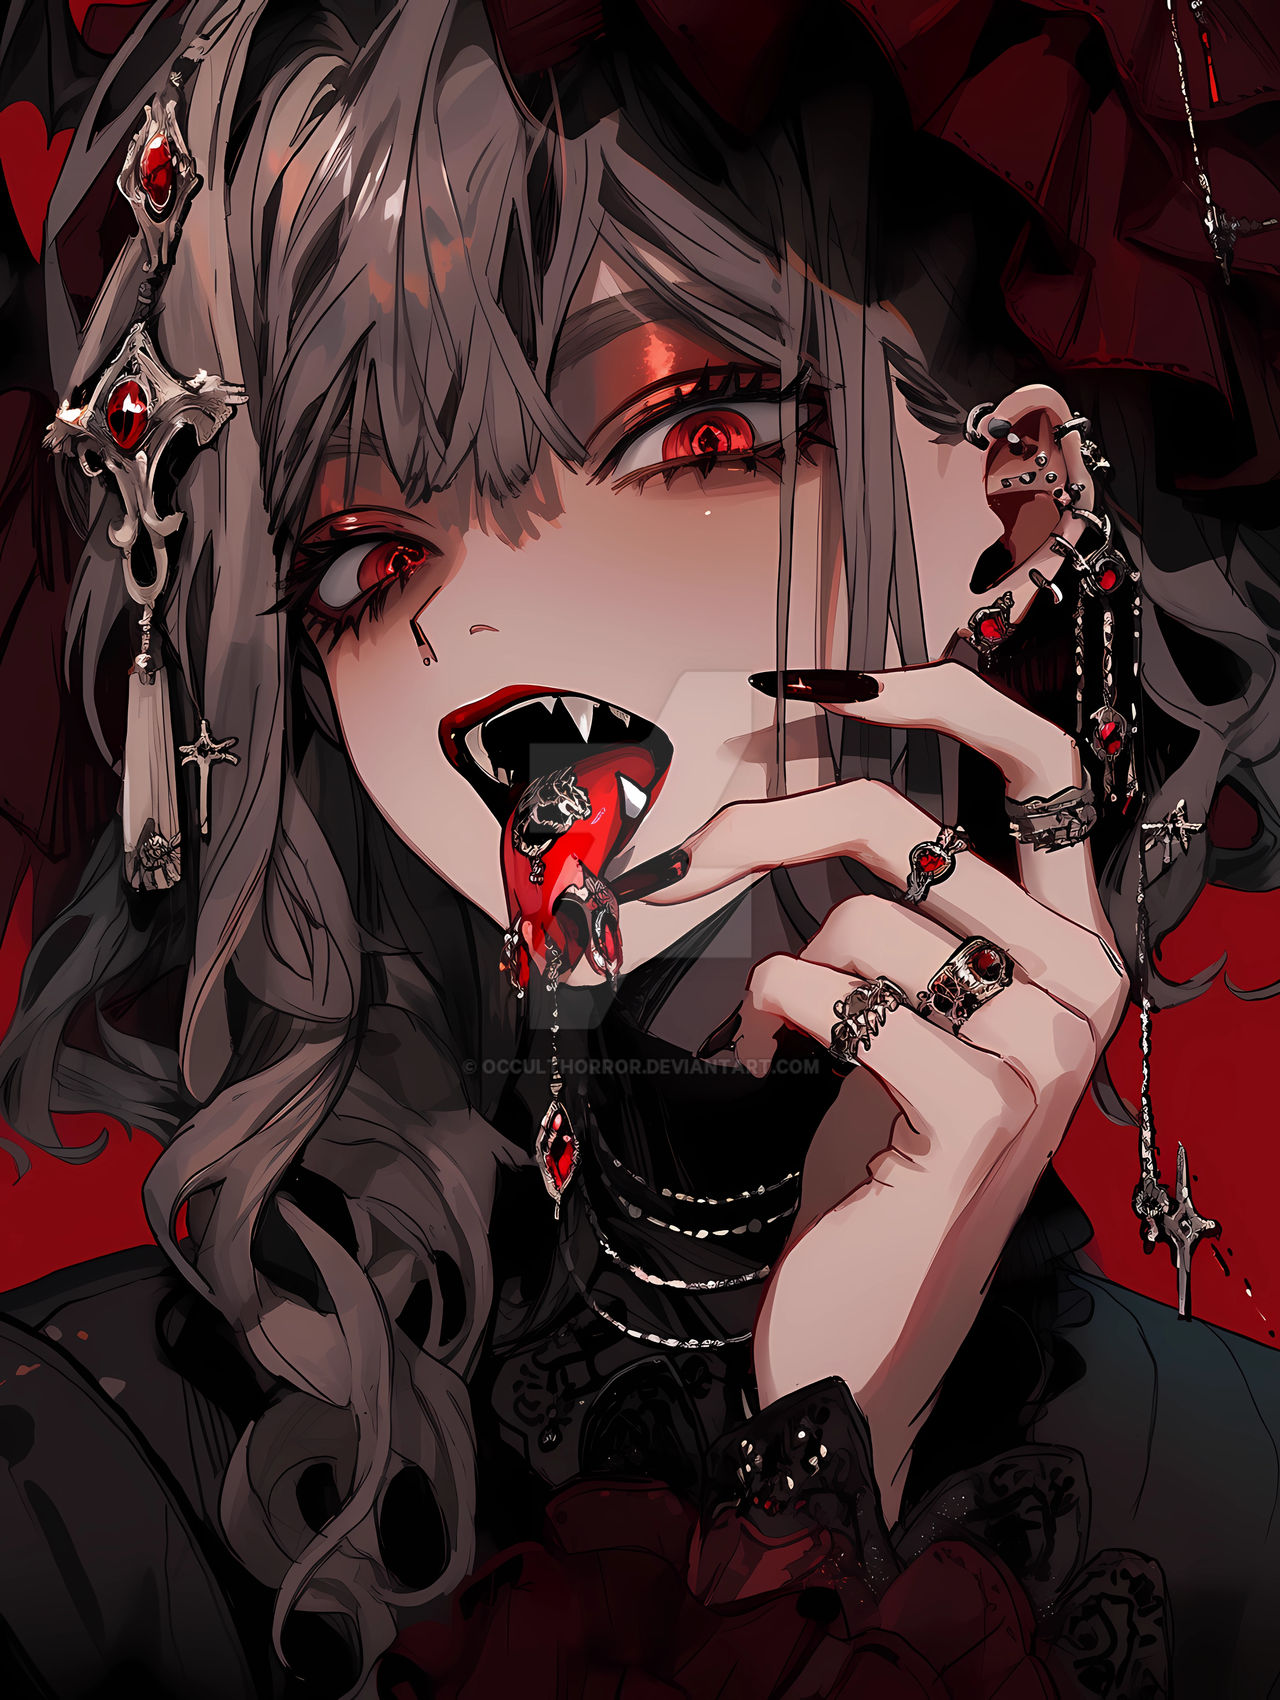 Vampire (with my Roblox avatar) by CuteFoxyGirl2992 on DeviantArt